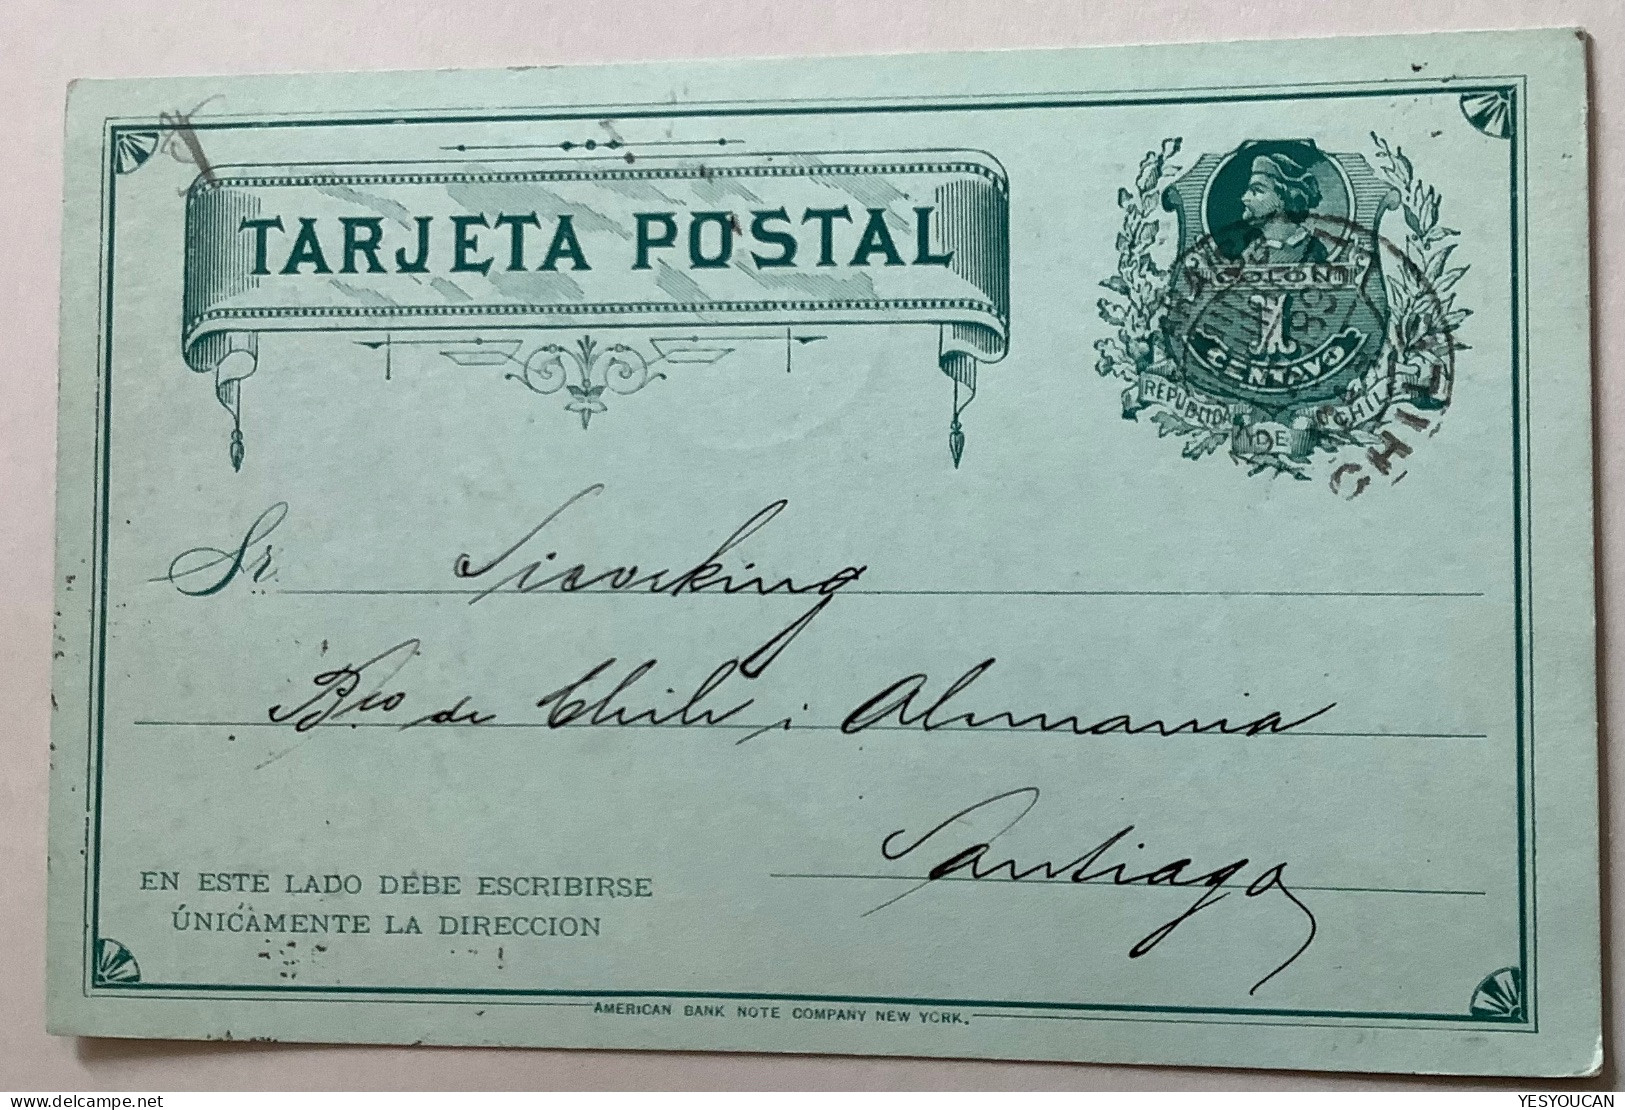 ADVERTISEMENT DEUTSCHER SCHÜTZENVEREIN 1898 Santiago Chile 1c Postal Stationery Card (shooting Sport Tir Fusil - Cile